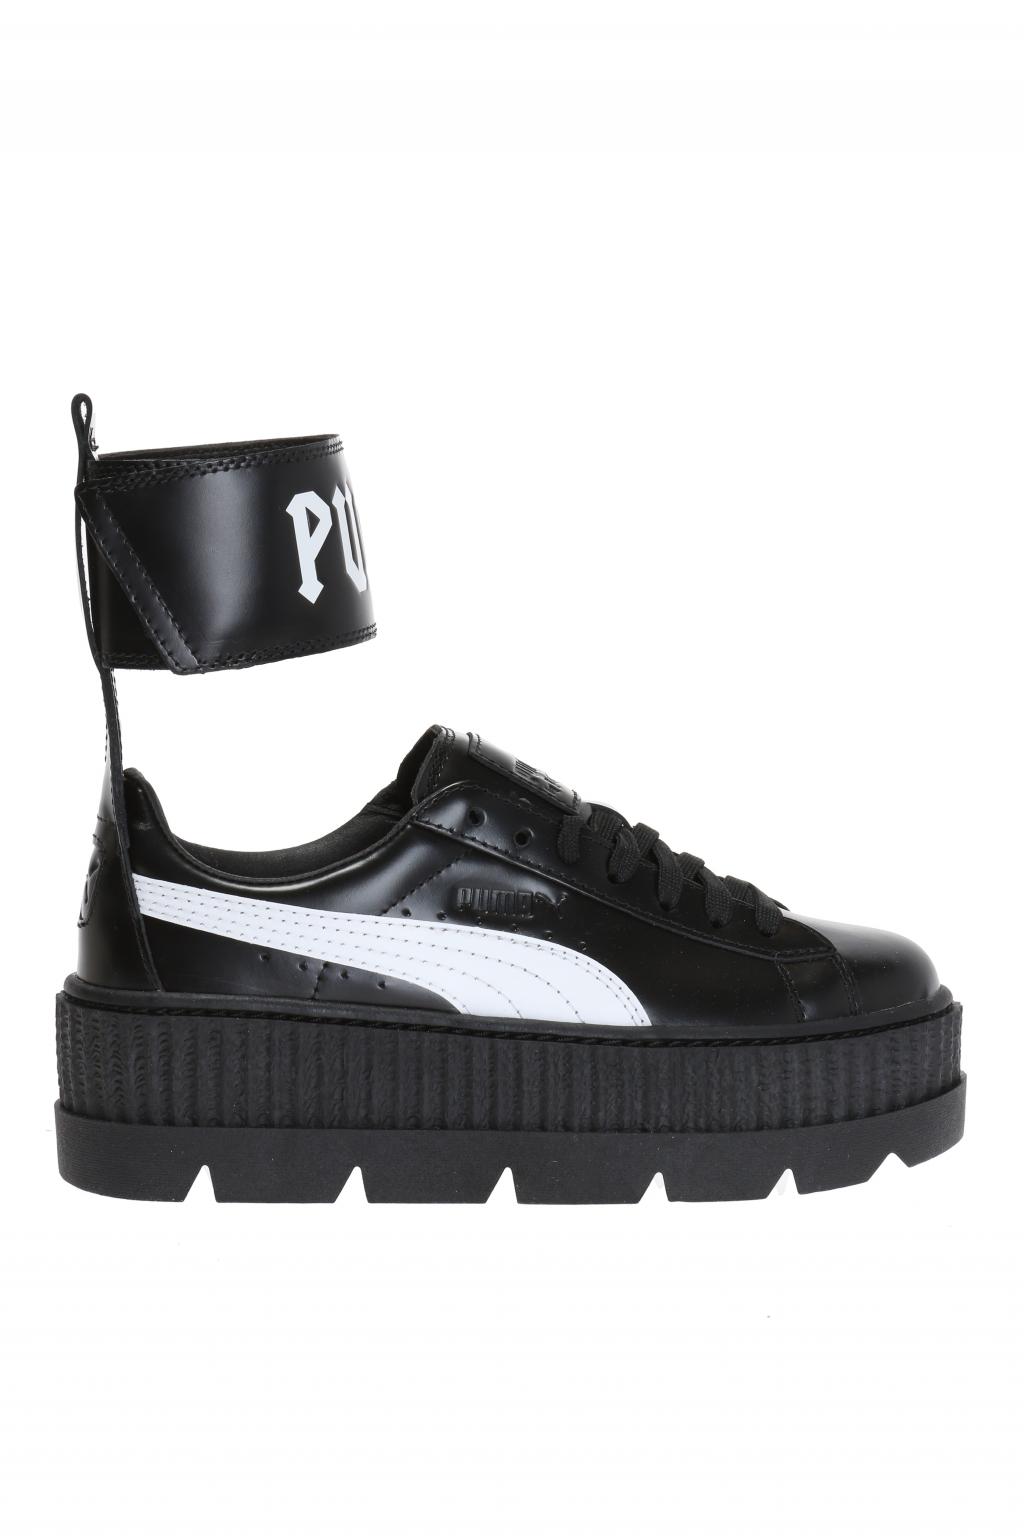 puma platform sneakers australia